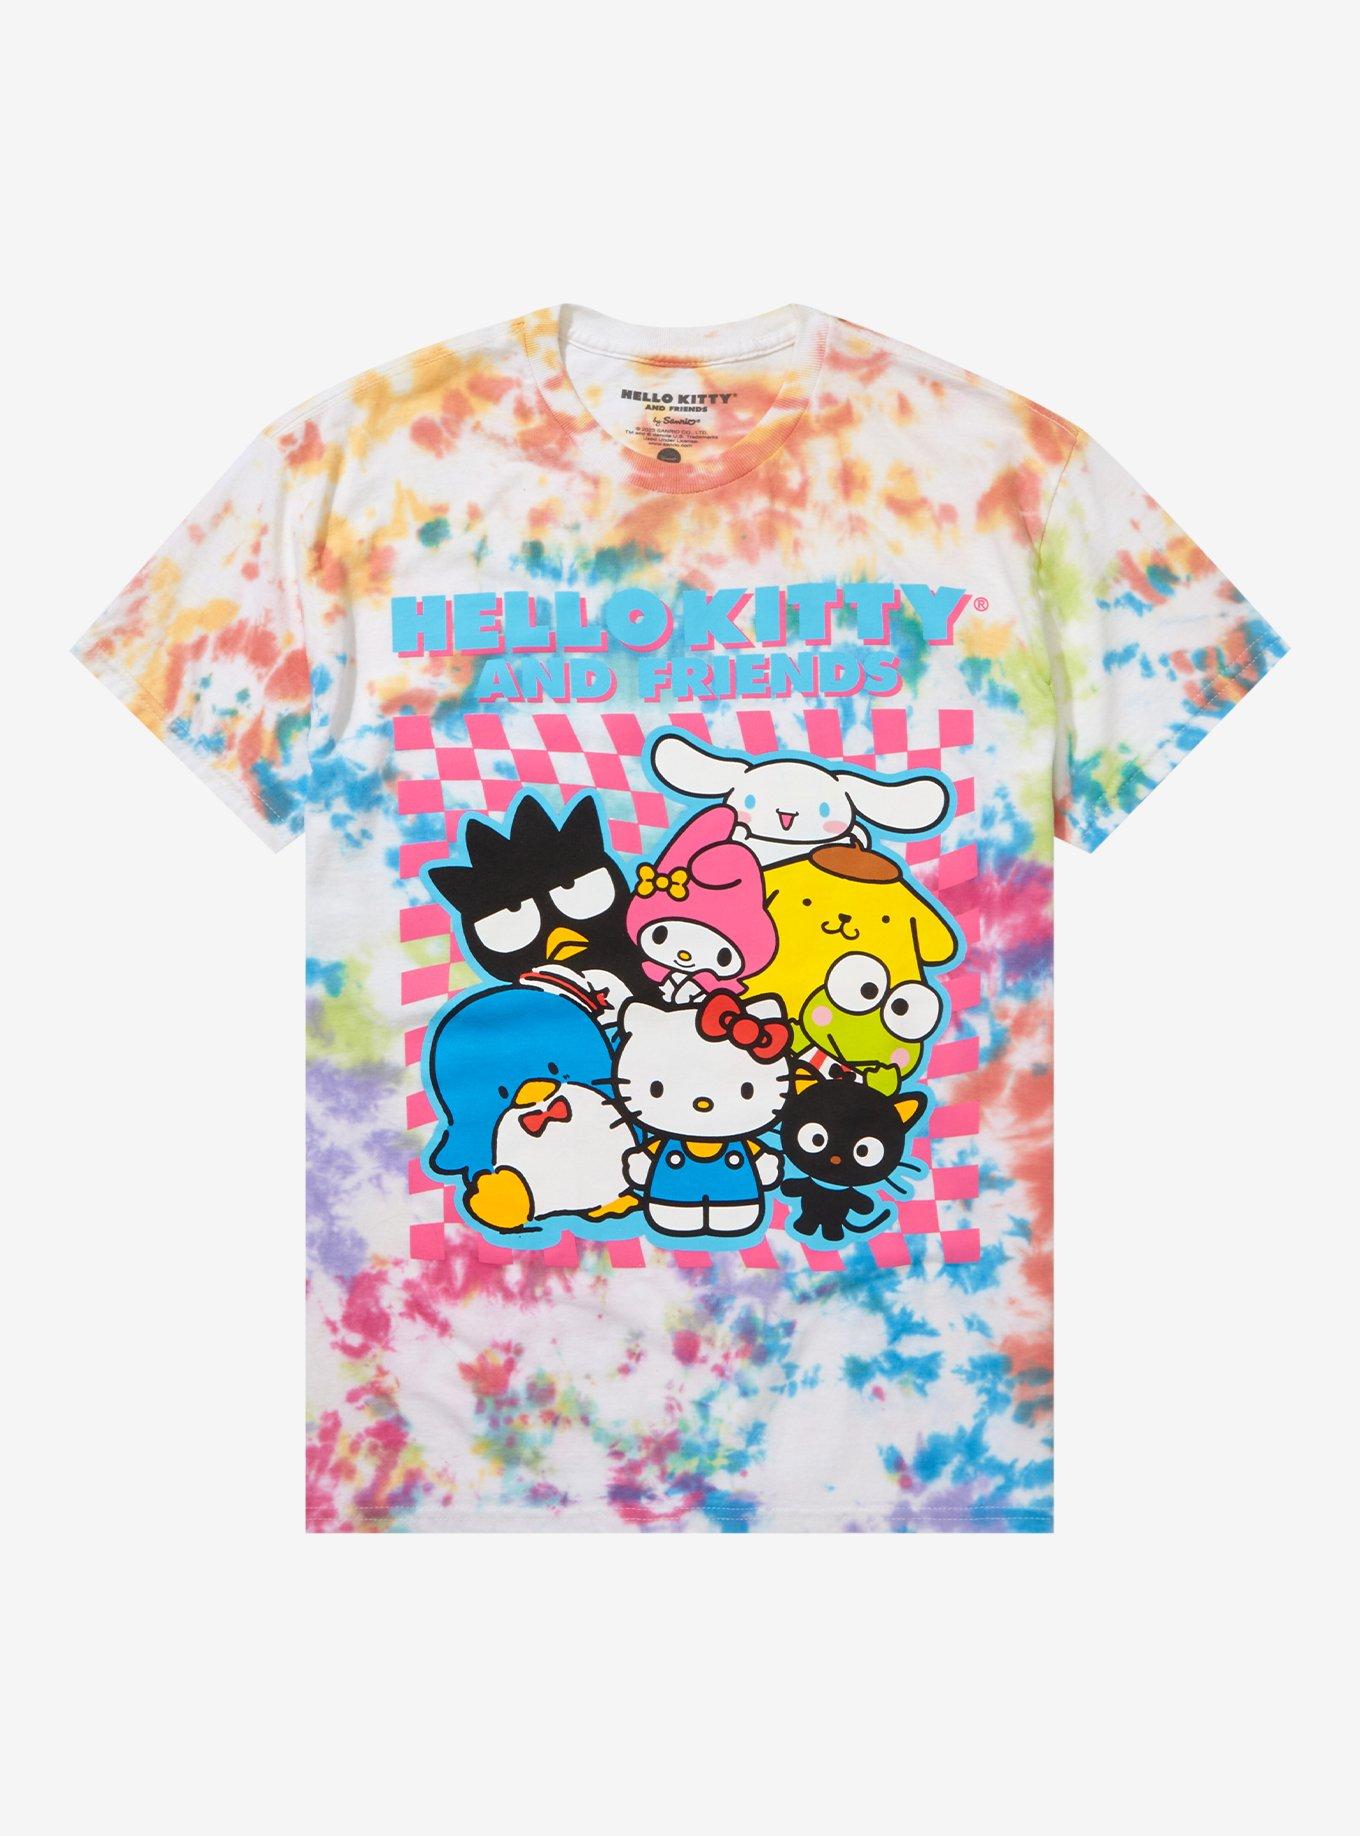 Hello Kitty And Friends Rainbow Checkered Tie-Dye Boyfriend Fit Girls T-Shirt